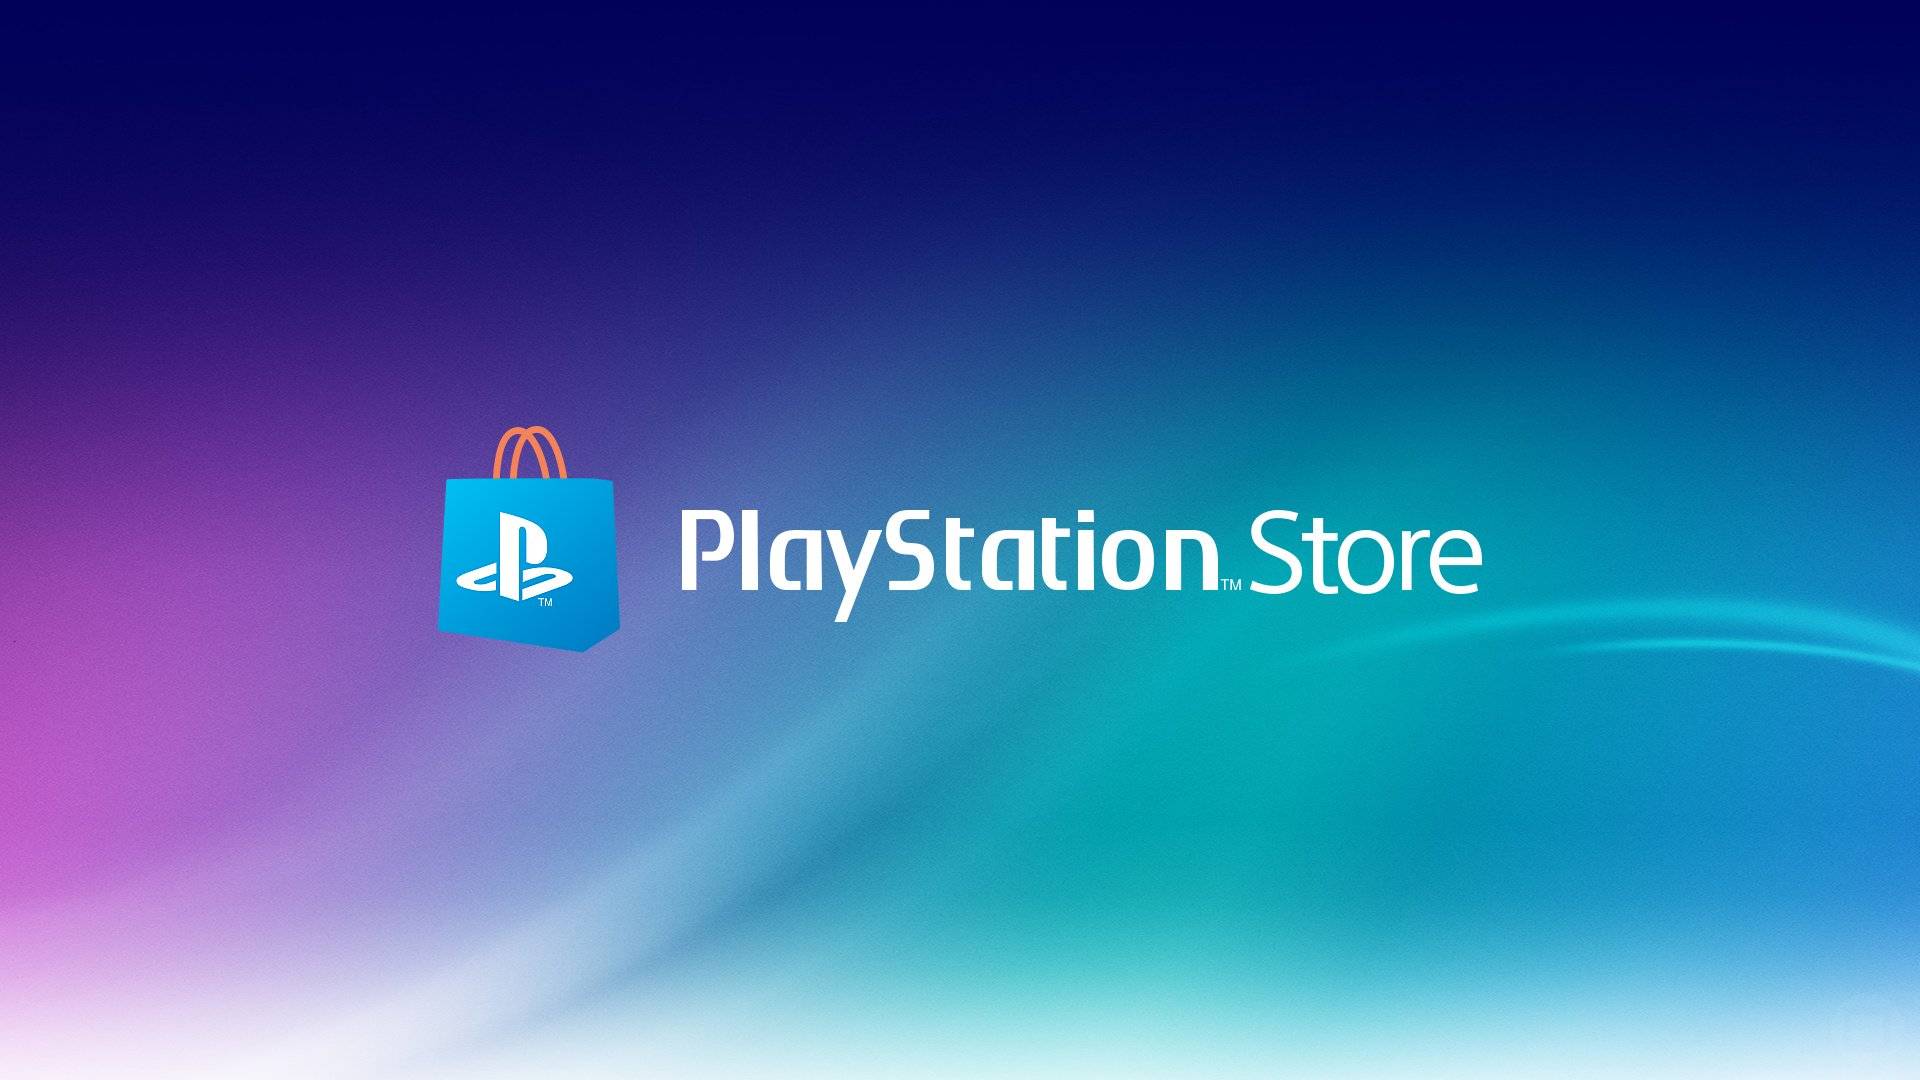 PlayStation Store oyun fiyatlarına zam!